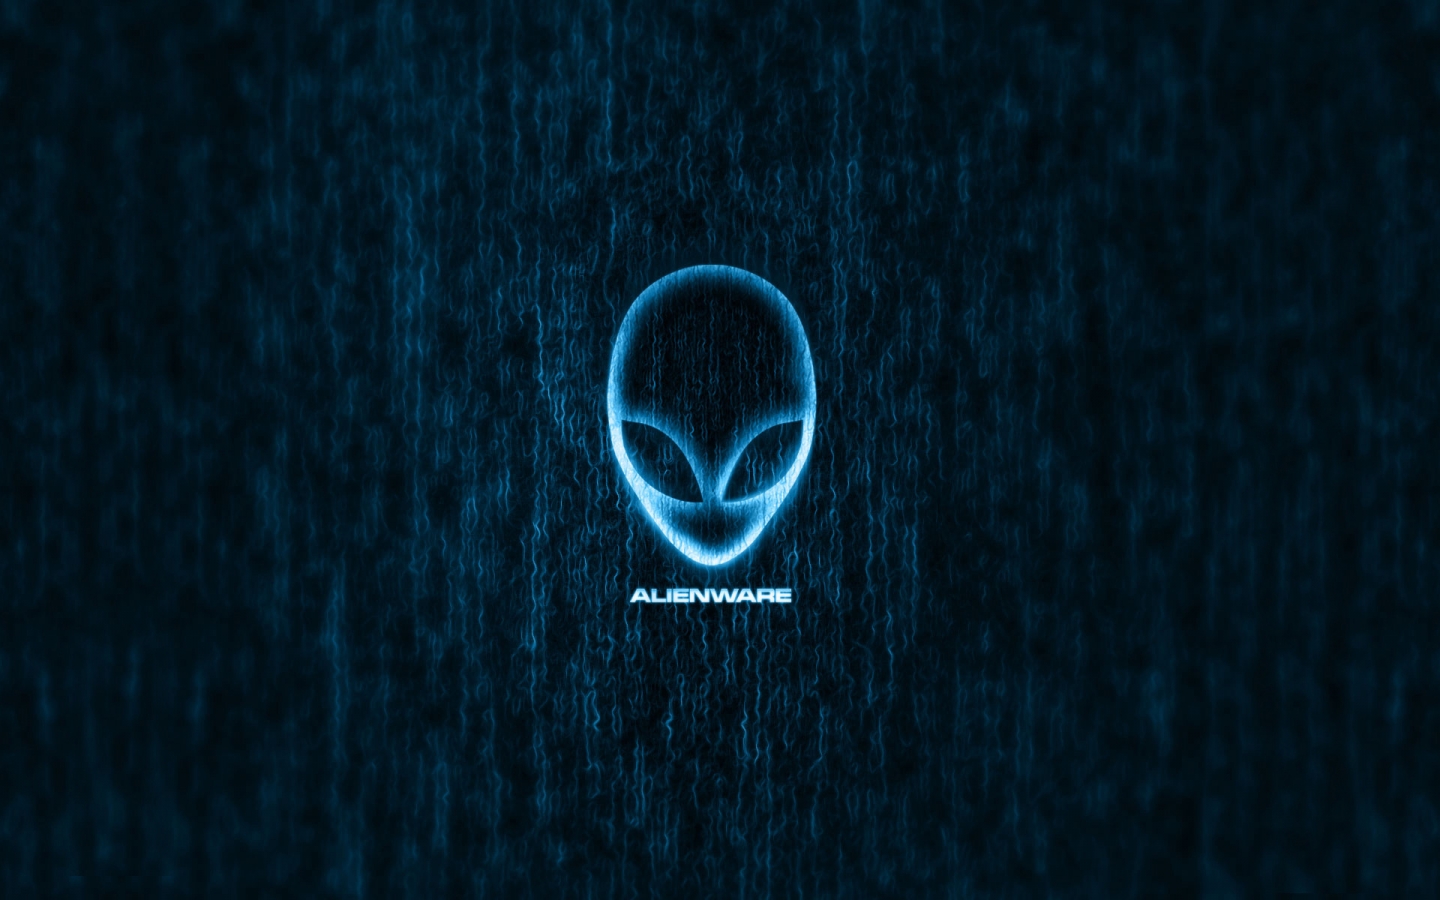 Alienware Company Logo for 1440 x 900 widescreen resolution